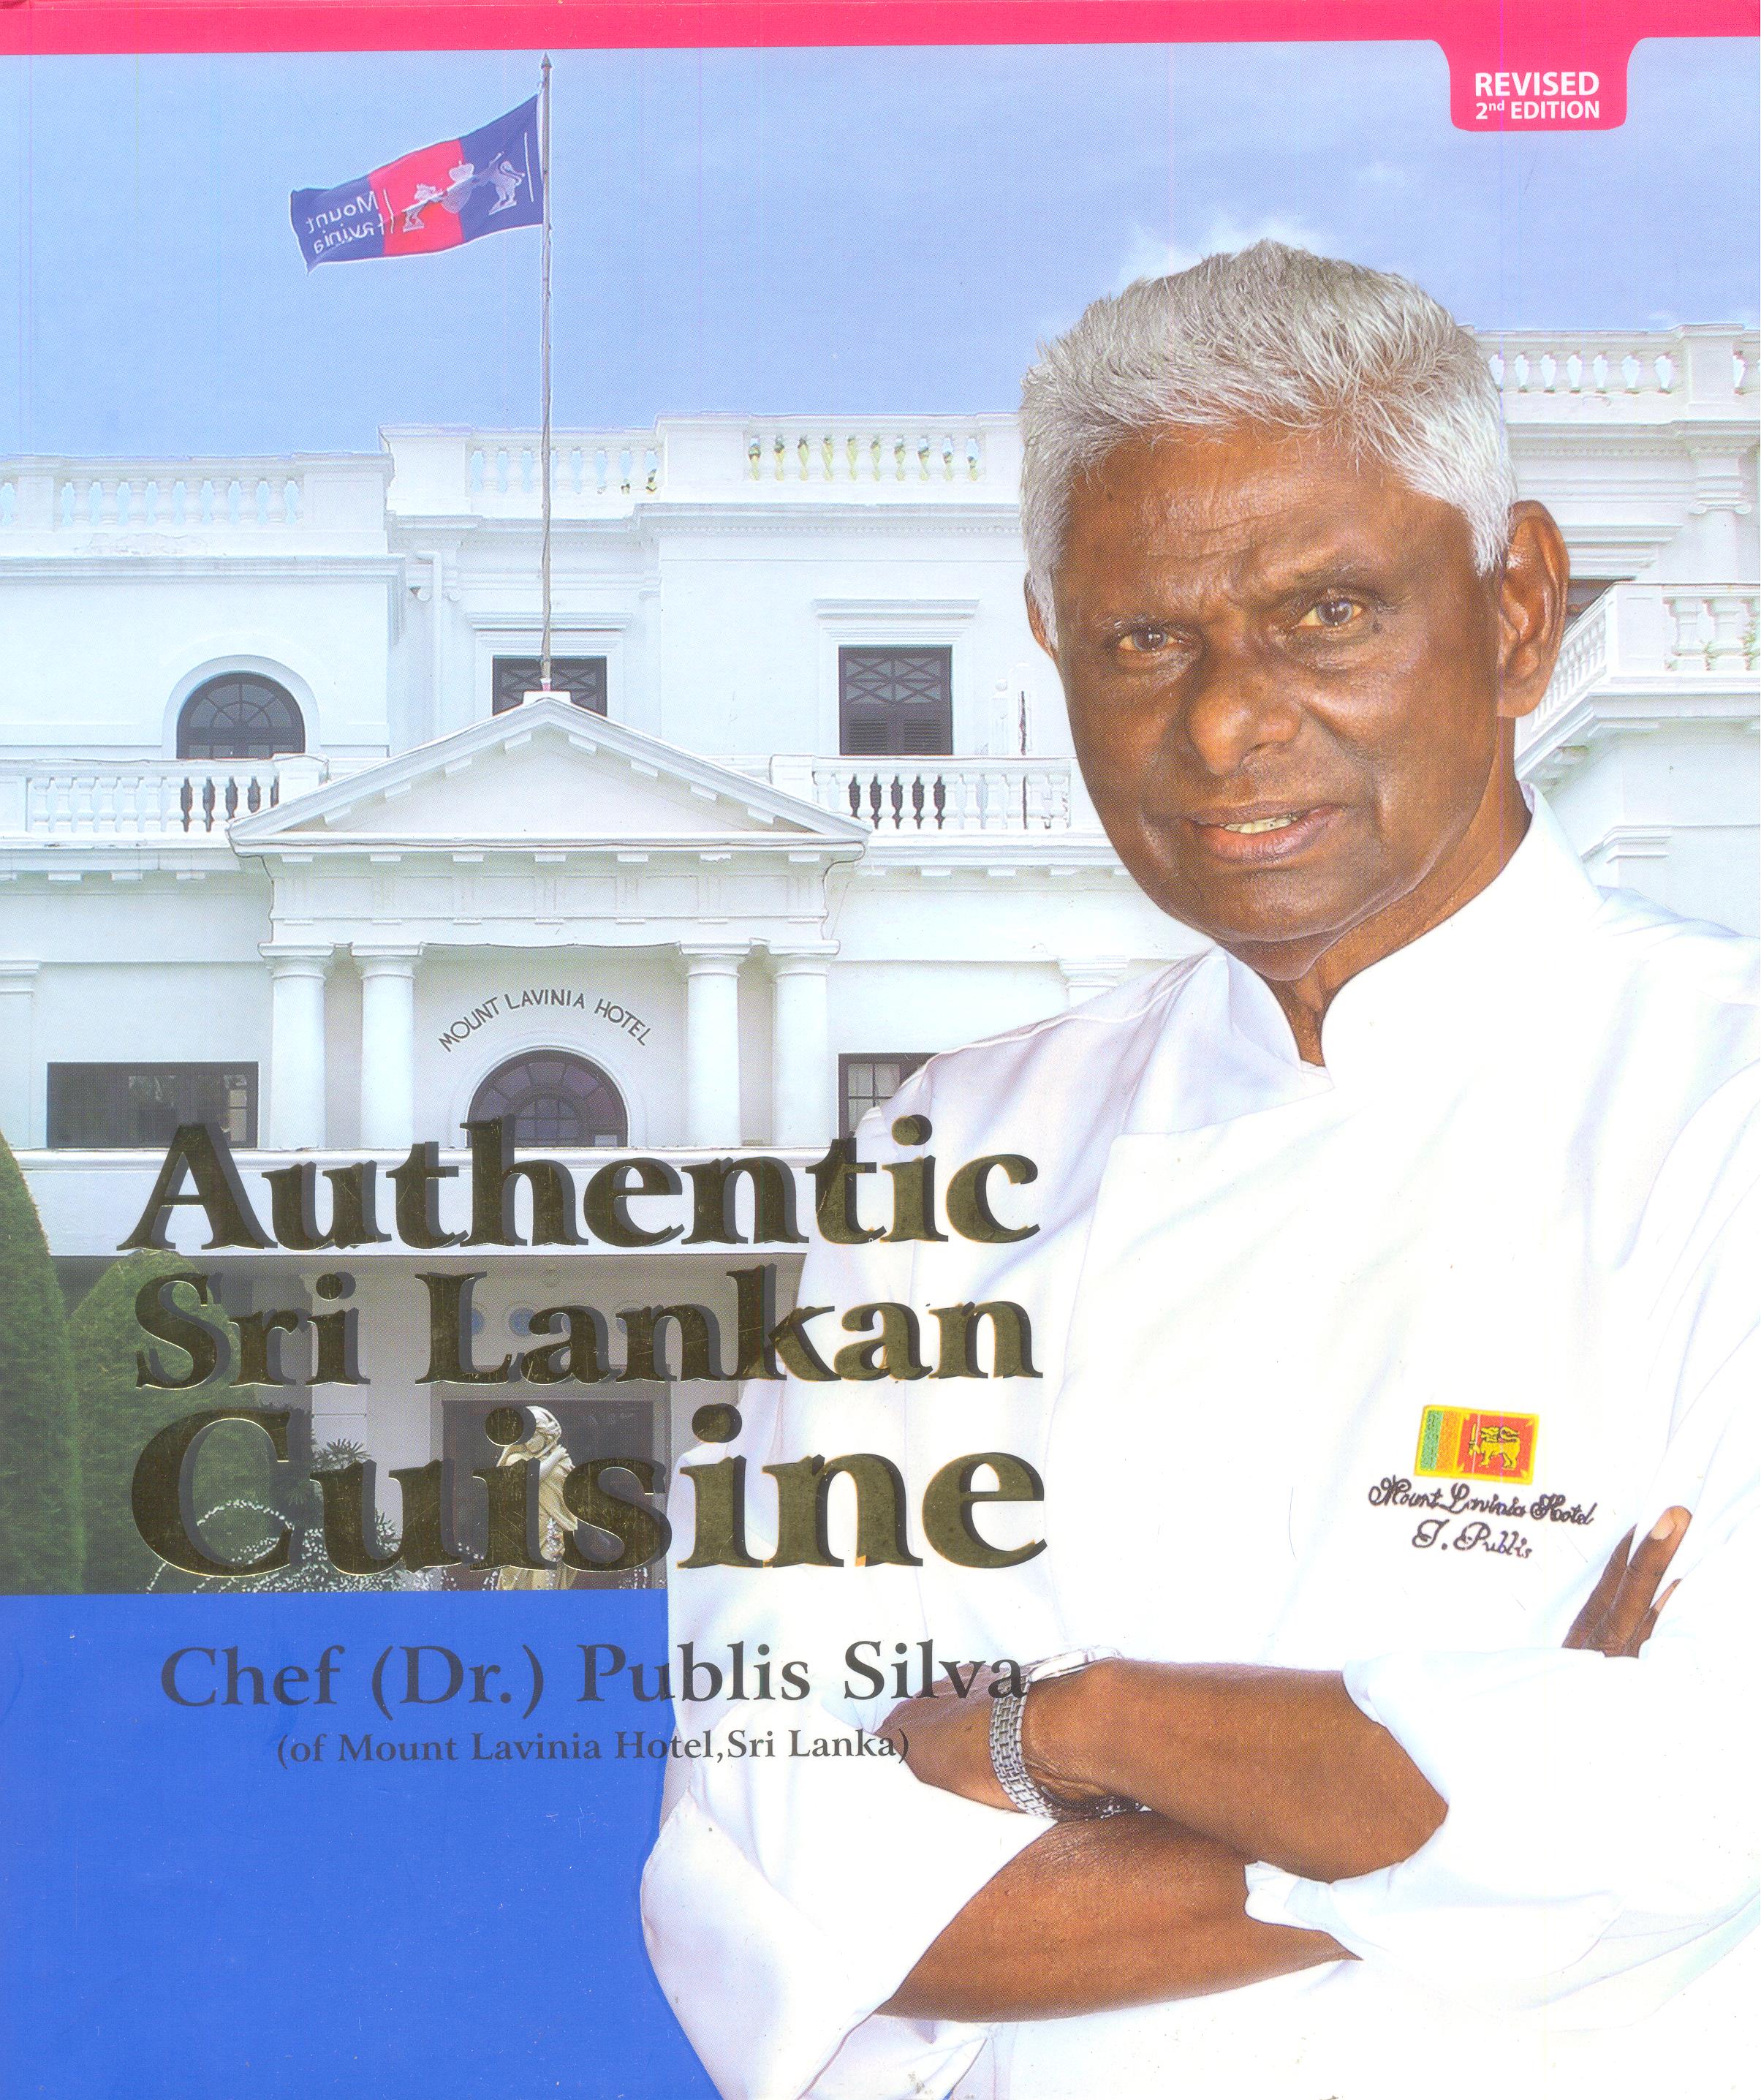 Authentic Sri Lankan Cuisine - Revised 2nd Edition